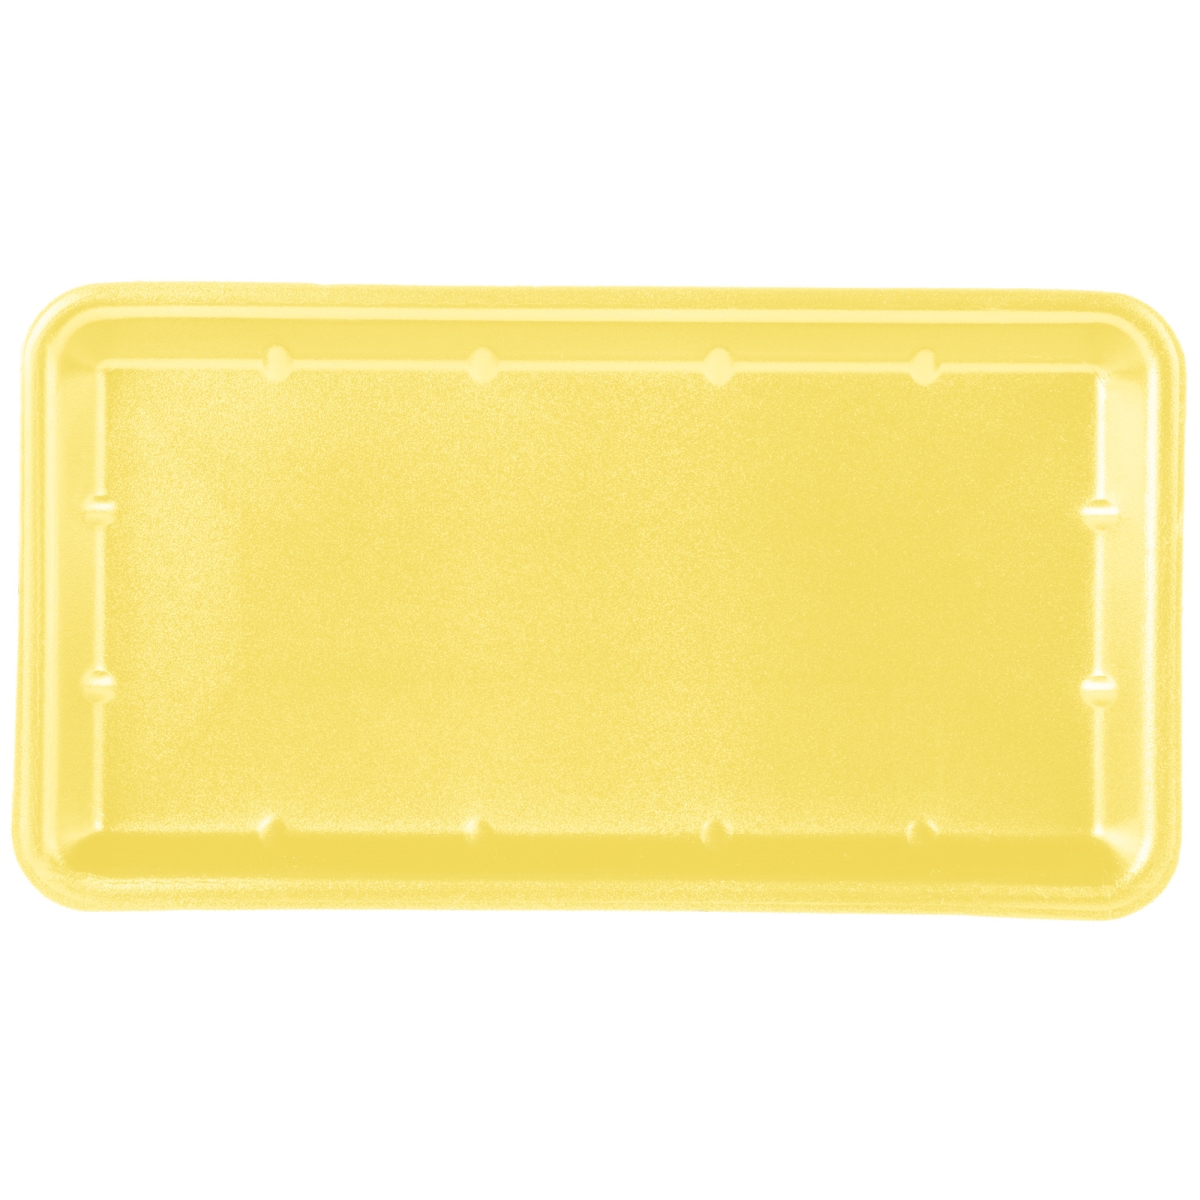 25syl 8 X 14.75 X 0.5 In. Supermarket Foam Meat Tray, Yellow, 125 Per Bag - 2 Bag